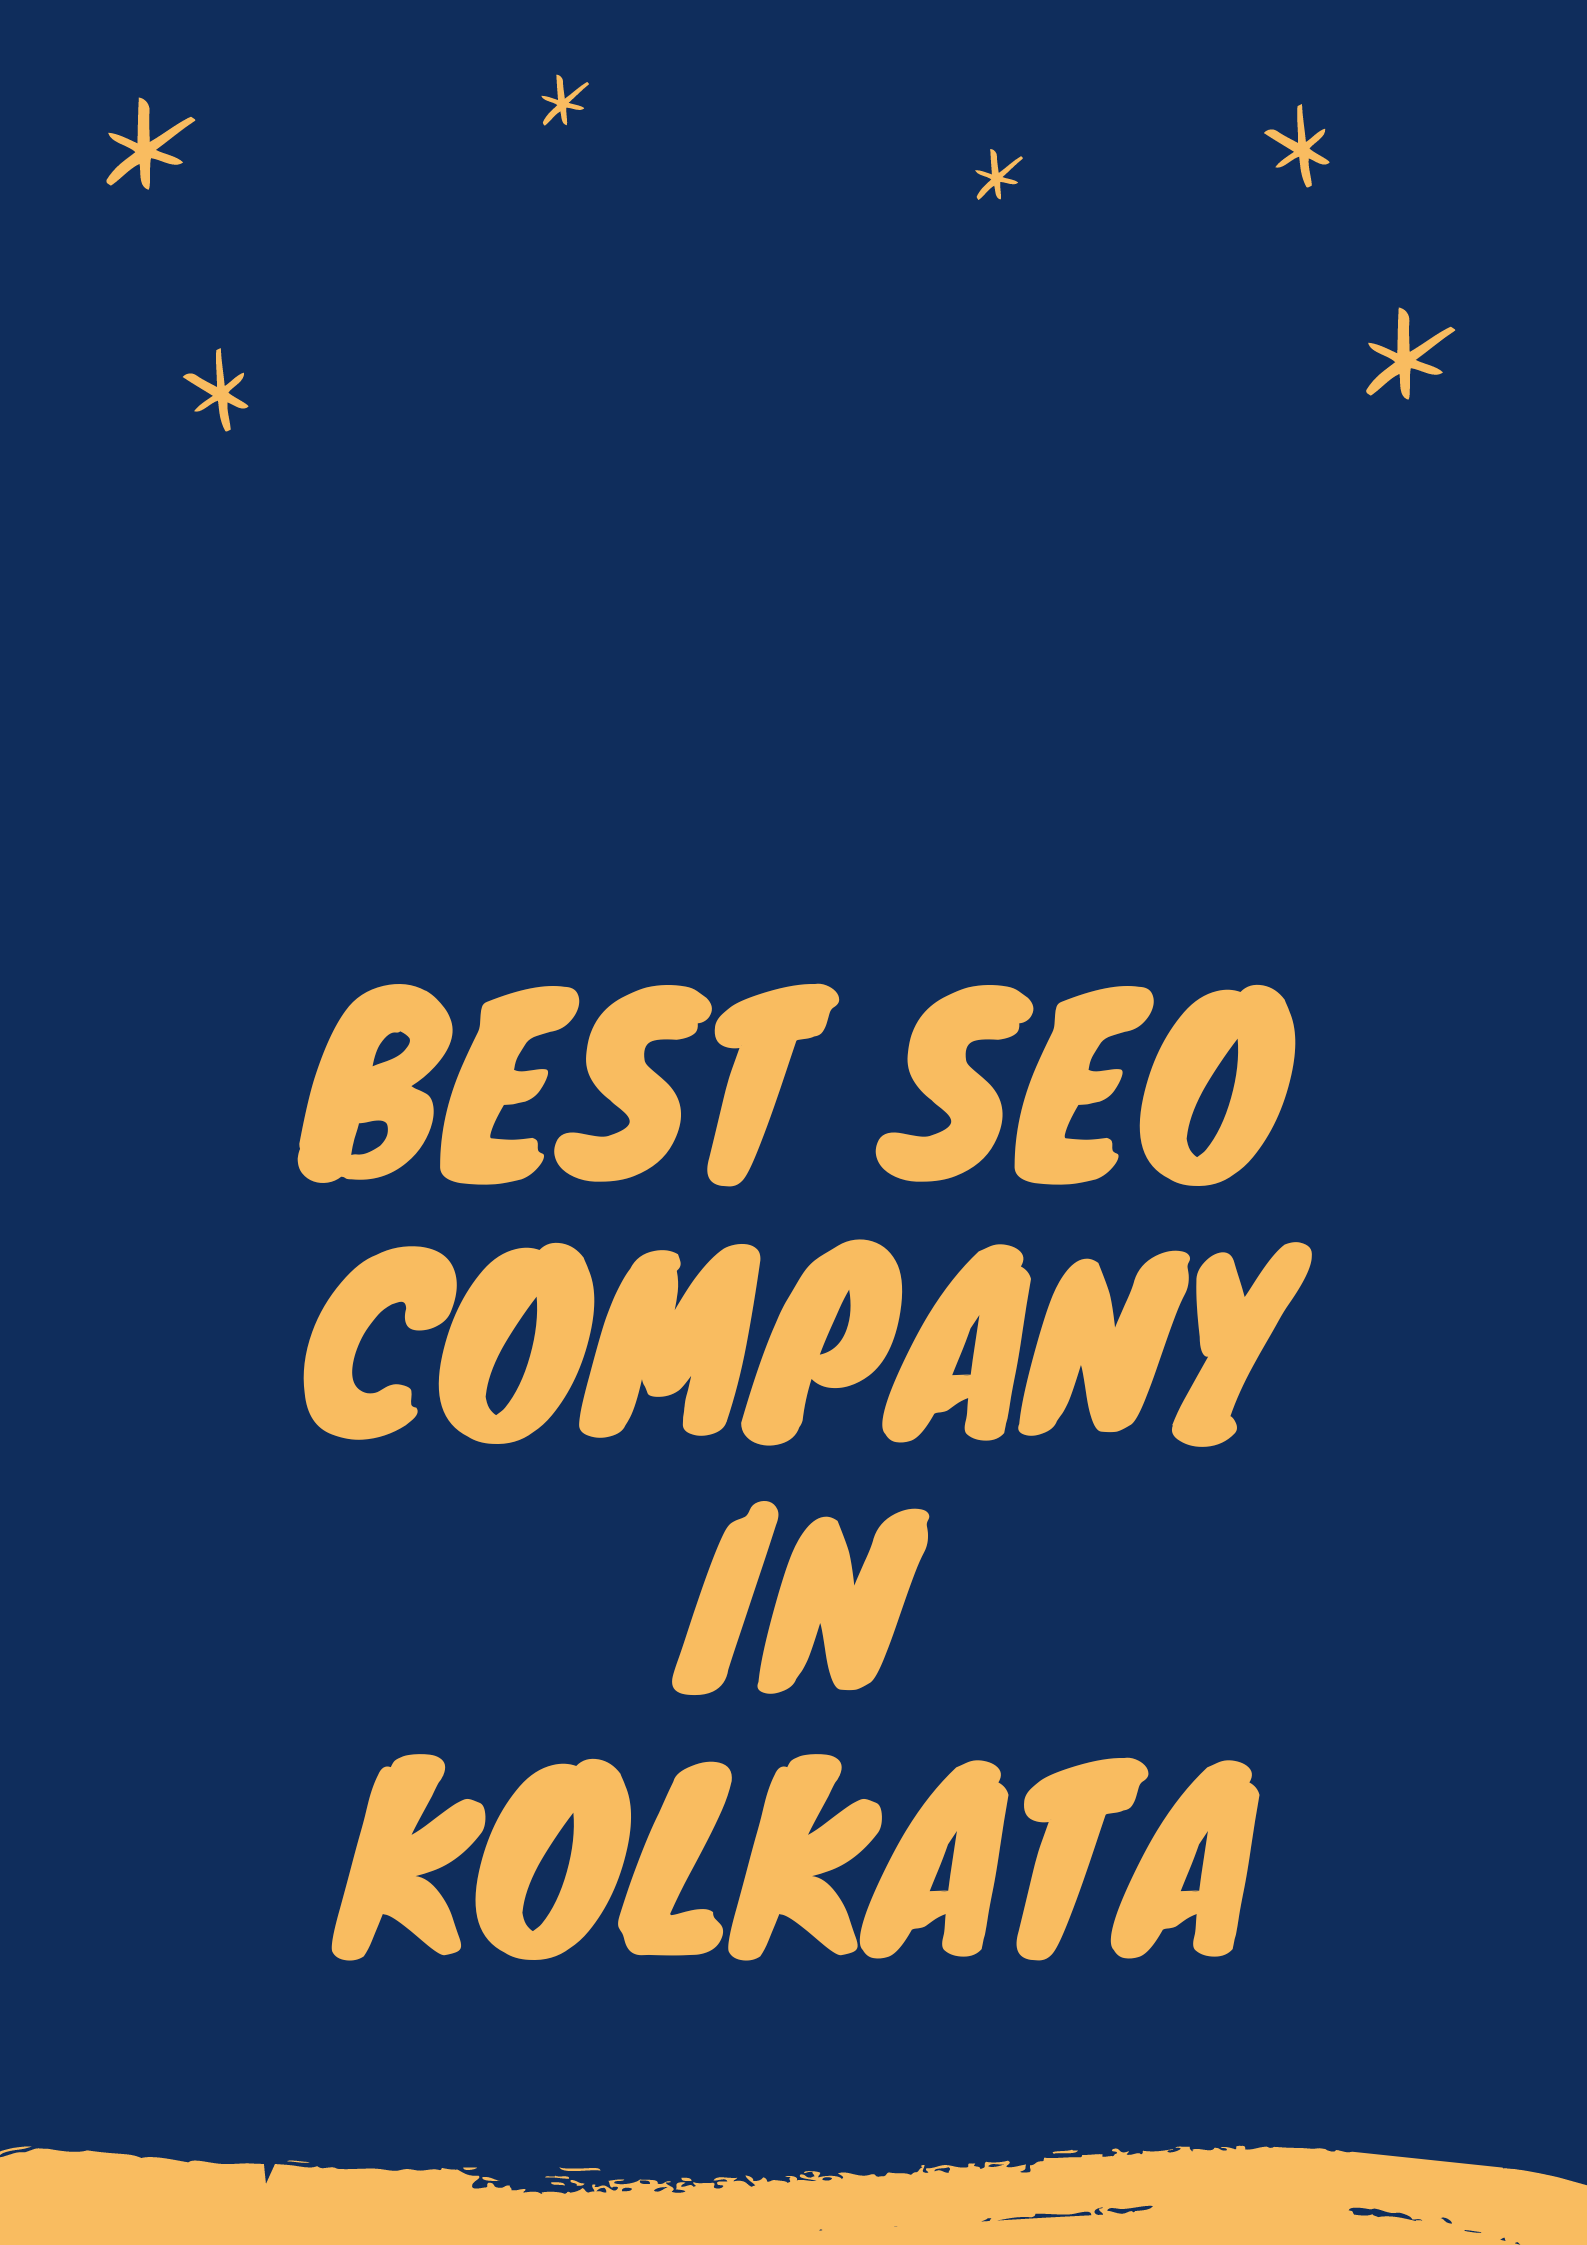 Best SEO Company in Kolkata| Reliable SEO Services